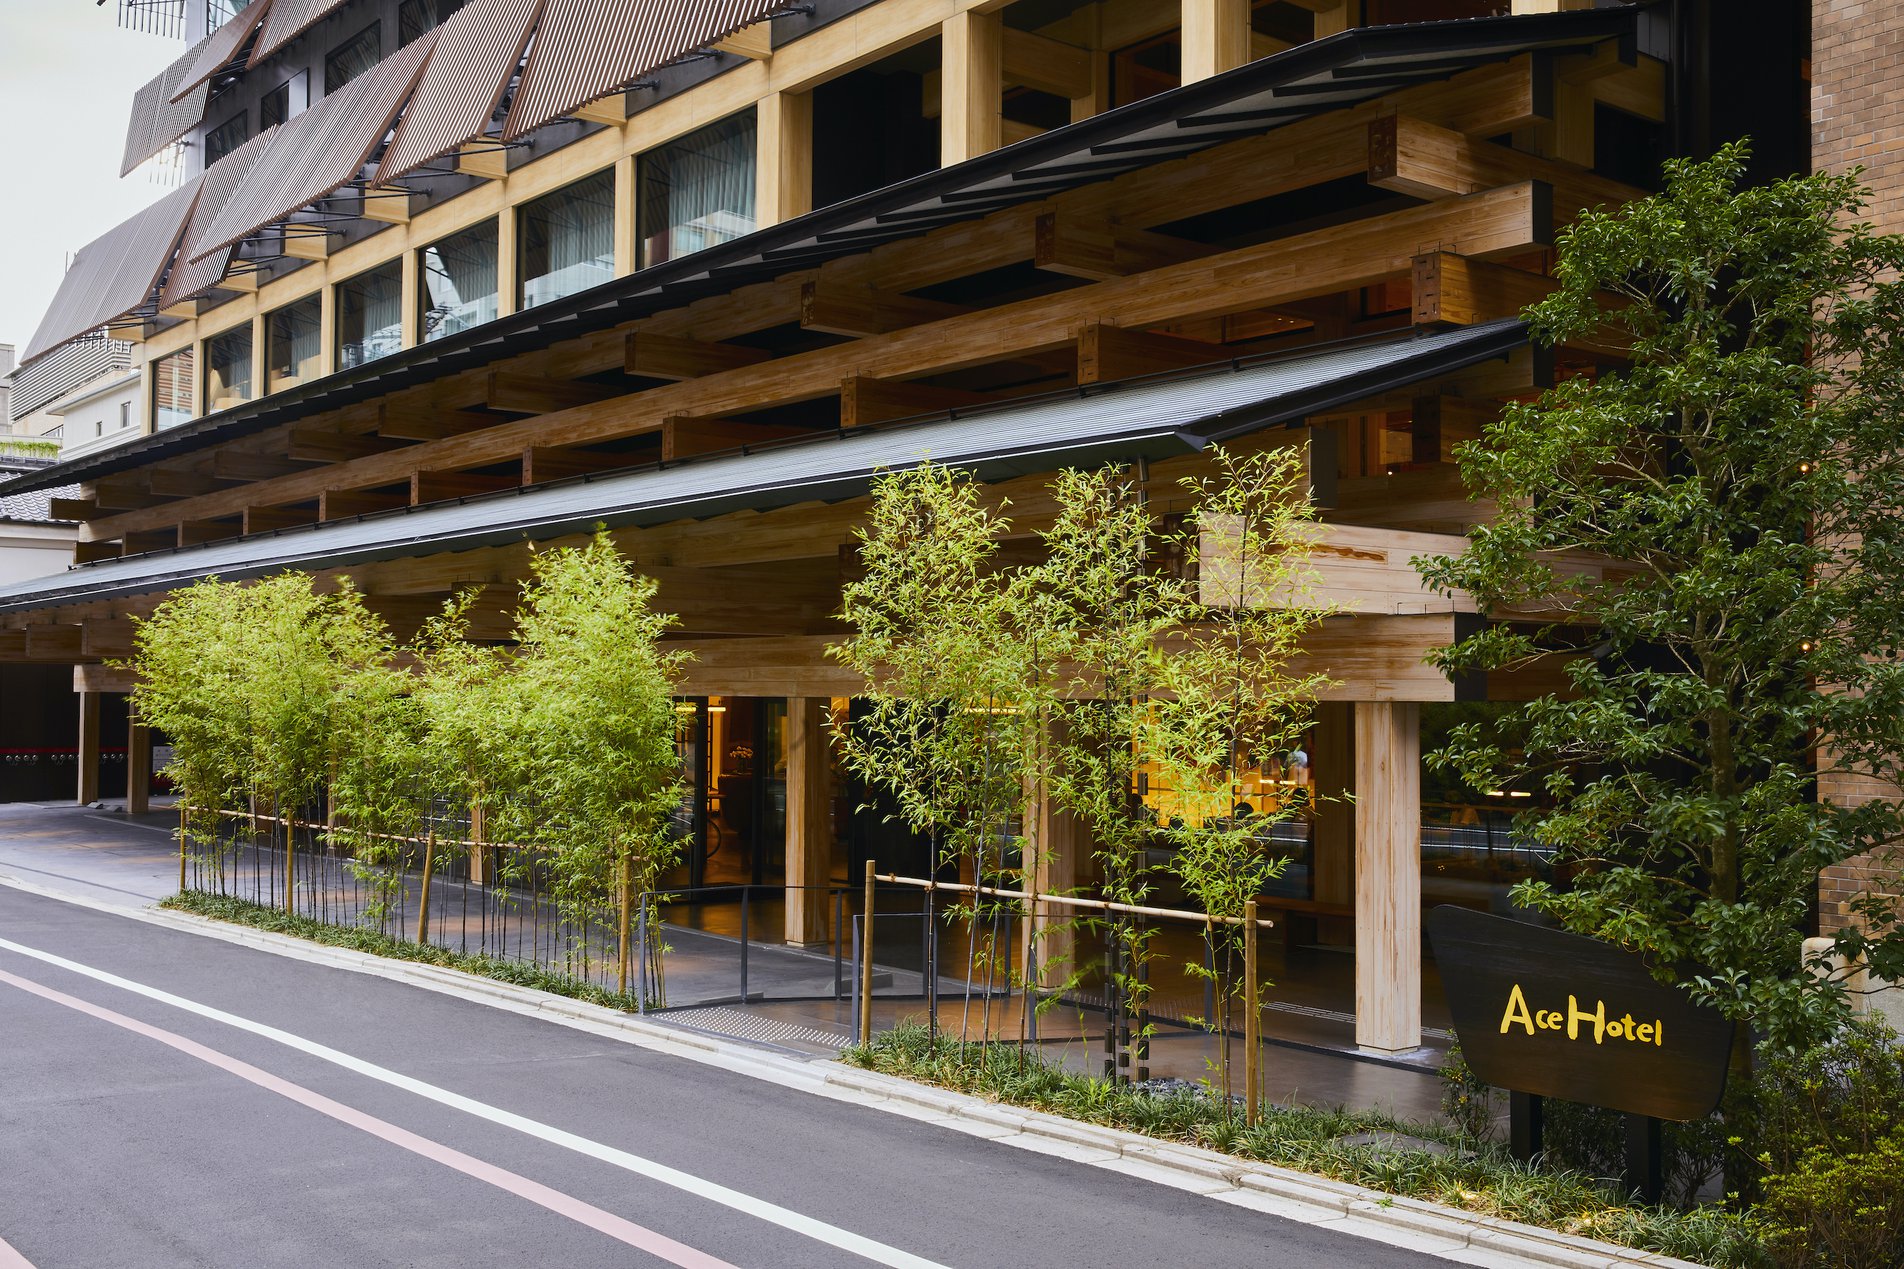 Ace Hotel Kyoto - Modern design hotel by Kengo Kuma and Commune, Kyoto